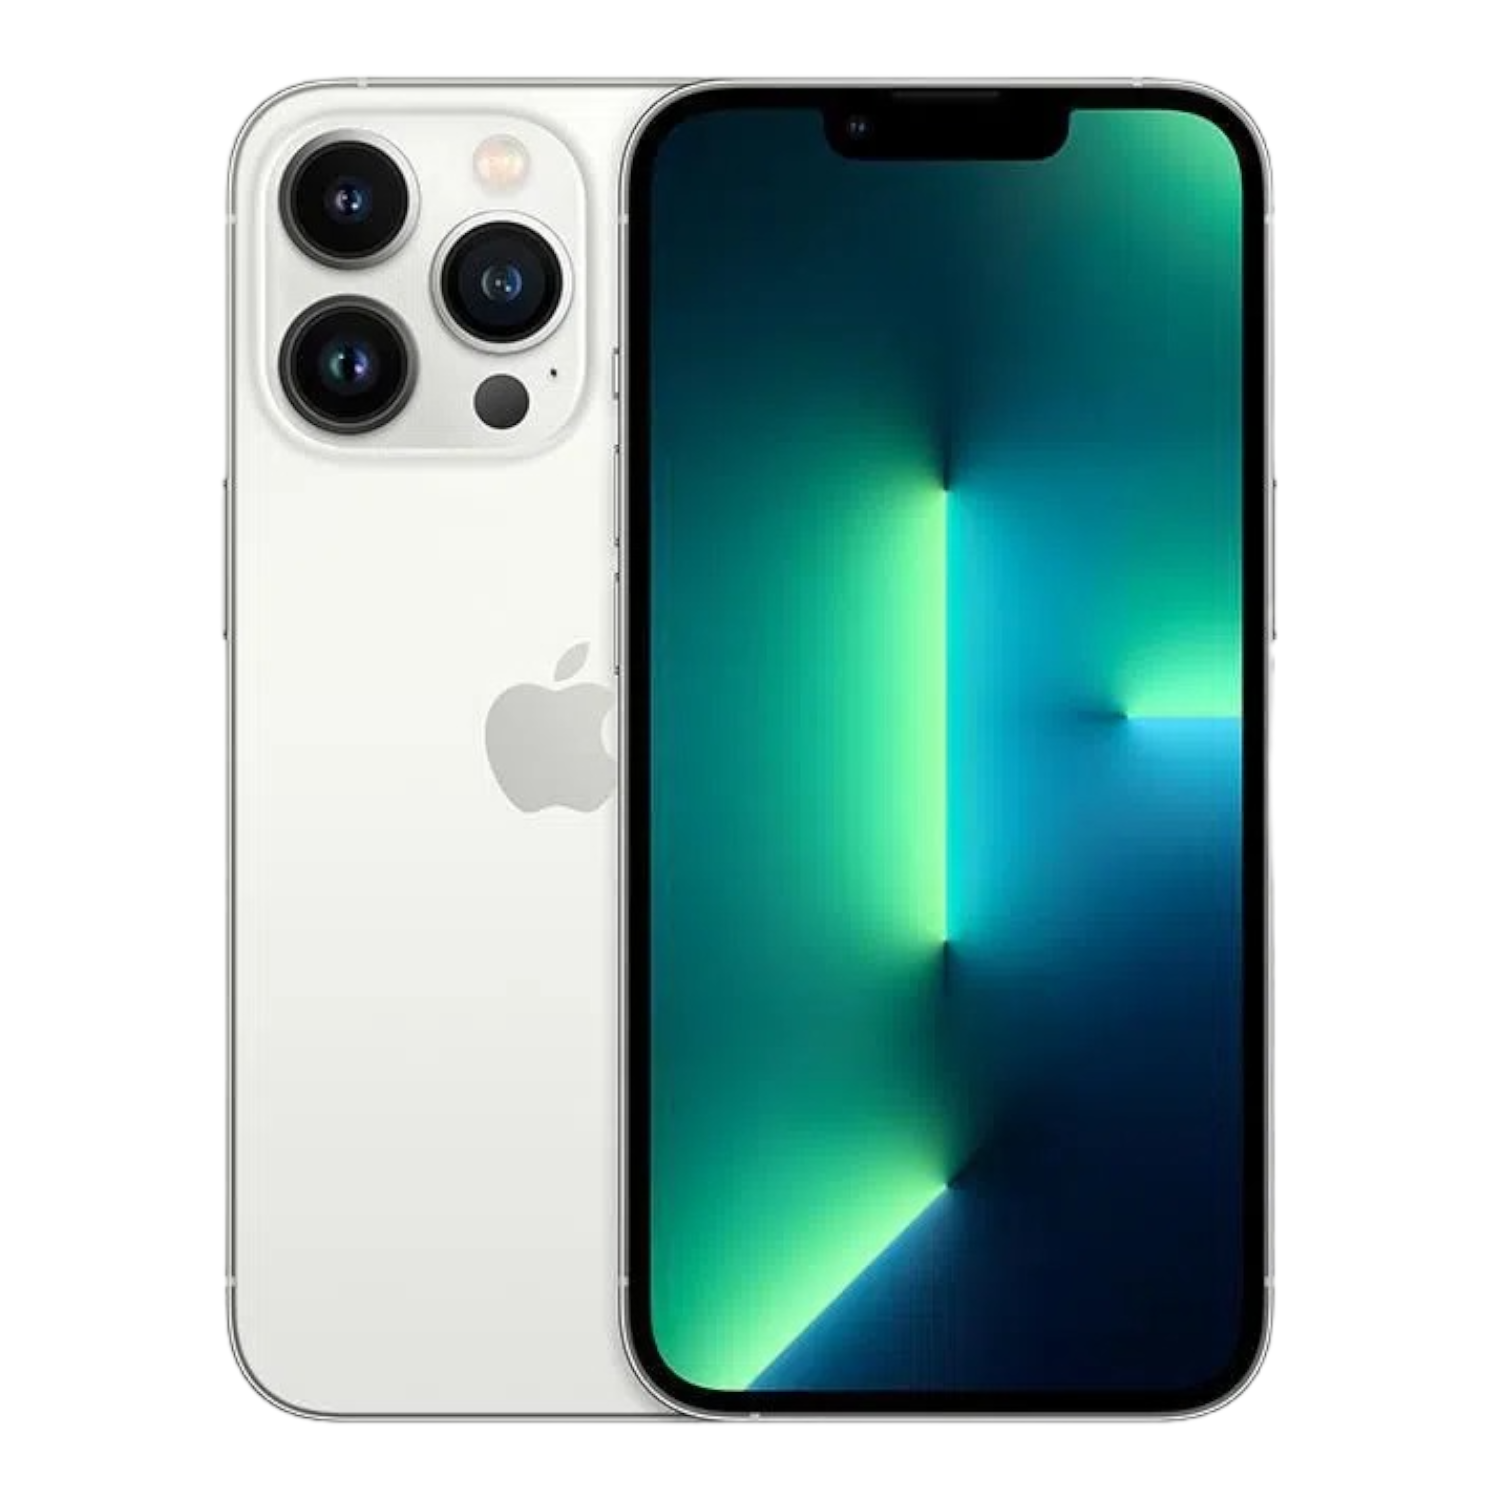 Apple Iphone 13 Pro Max 128GB Celular Liberado (Reacondicionado) Color Plata